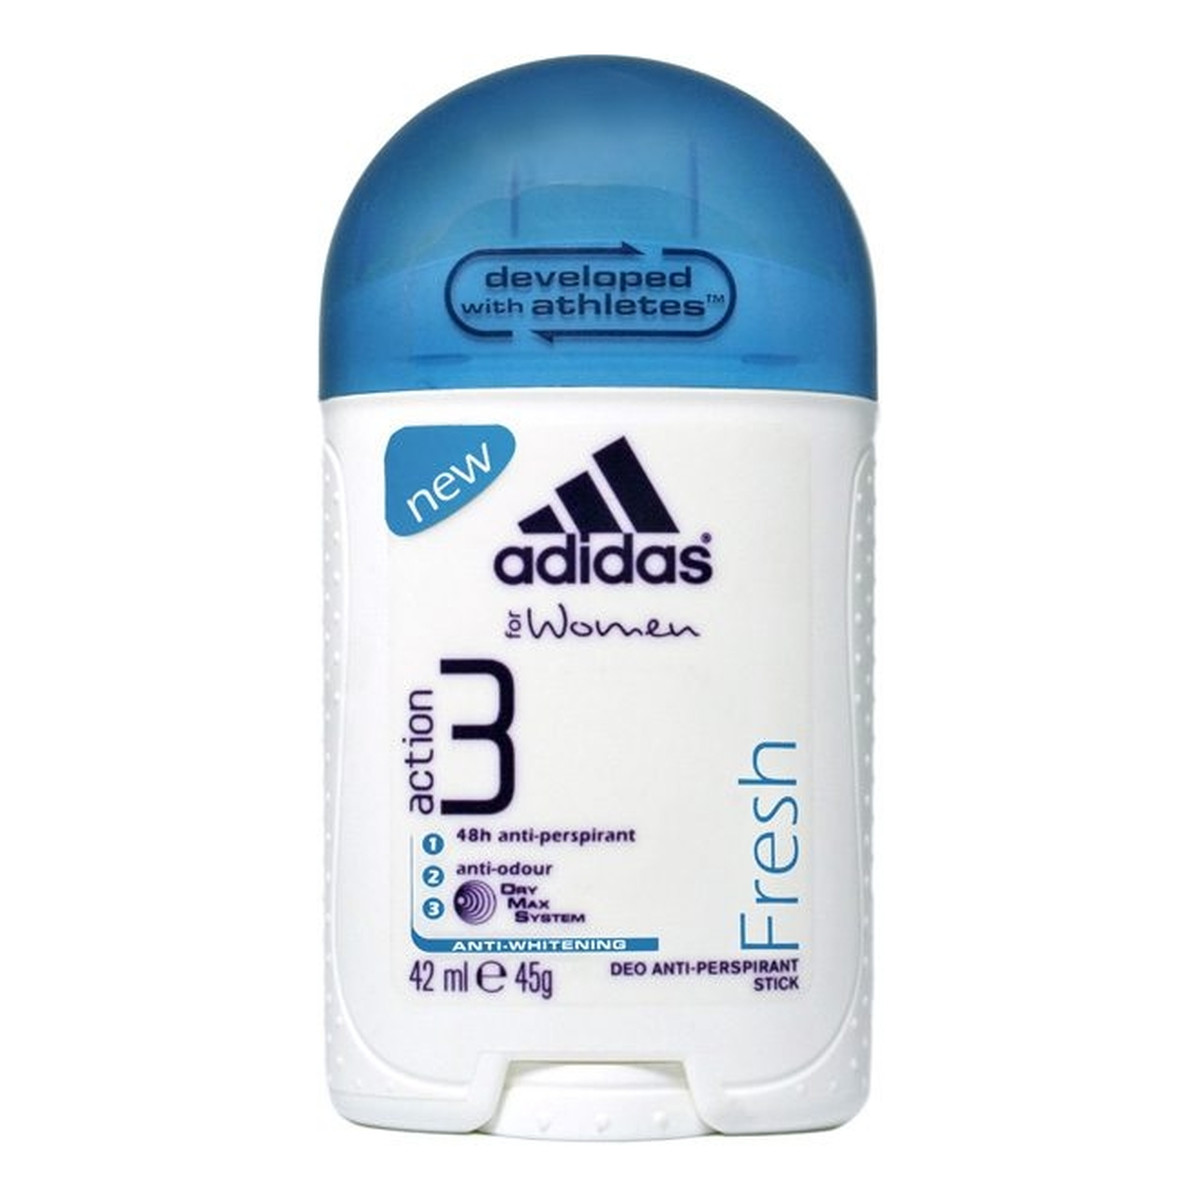 Adidas Action 3 Women Fresh Dezodorant Sztyft 42ml